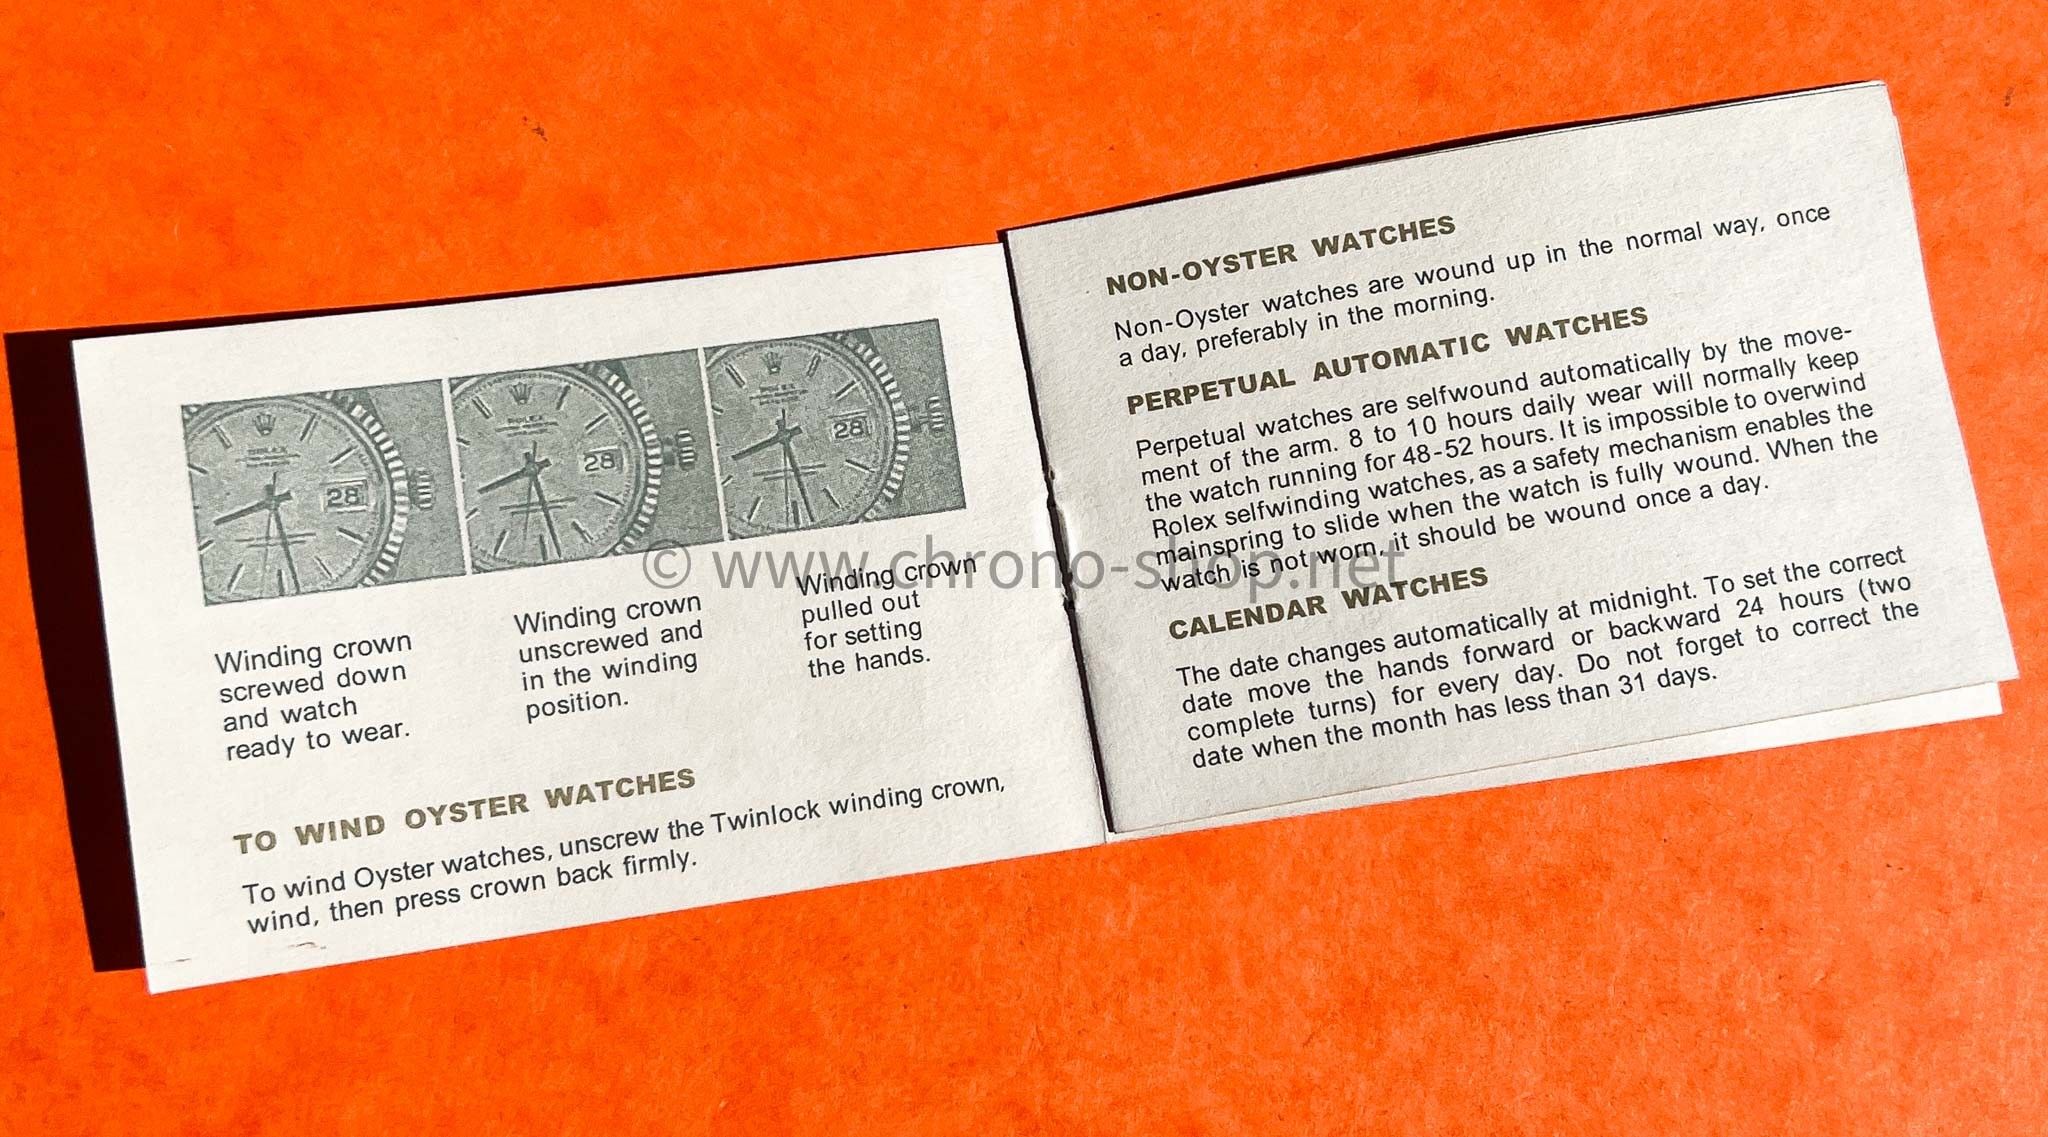 Rolex Blank 1971 Warranty Paper guarantee booklet ref 11.618-573.02-971-100 Submariner 1680,5513,5512 Daytona 6263,6262,6239